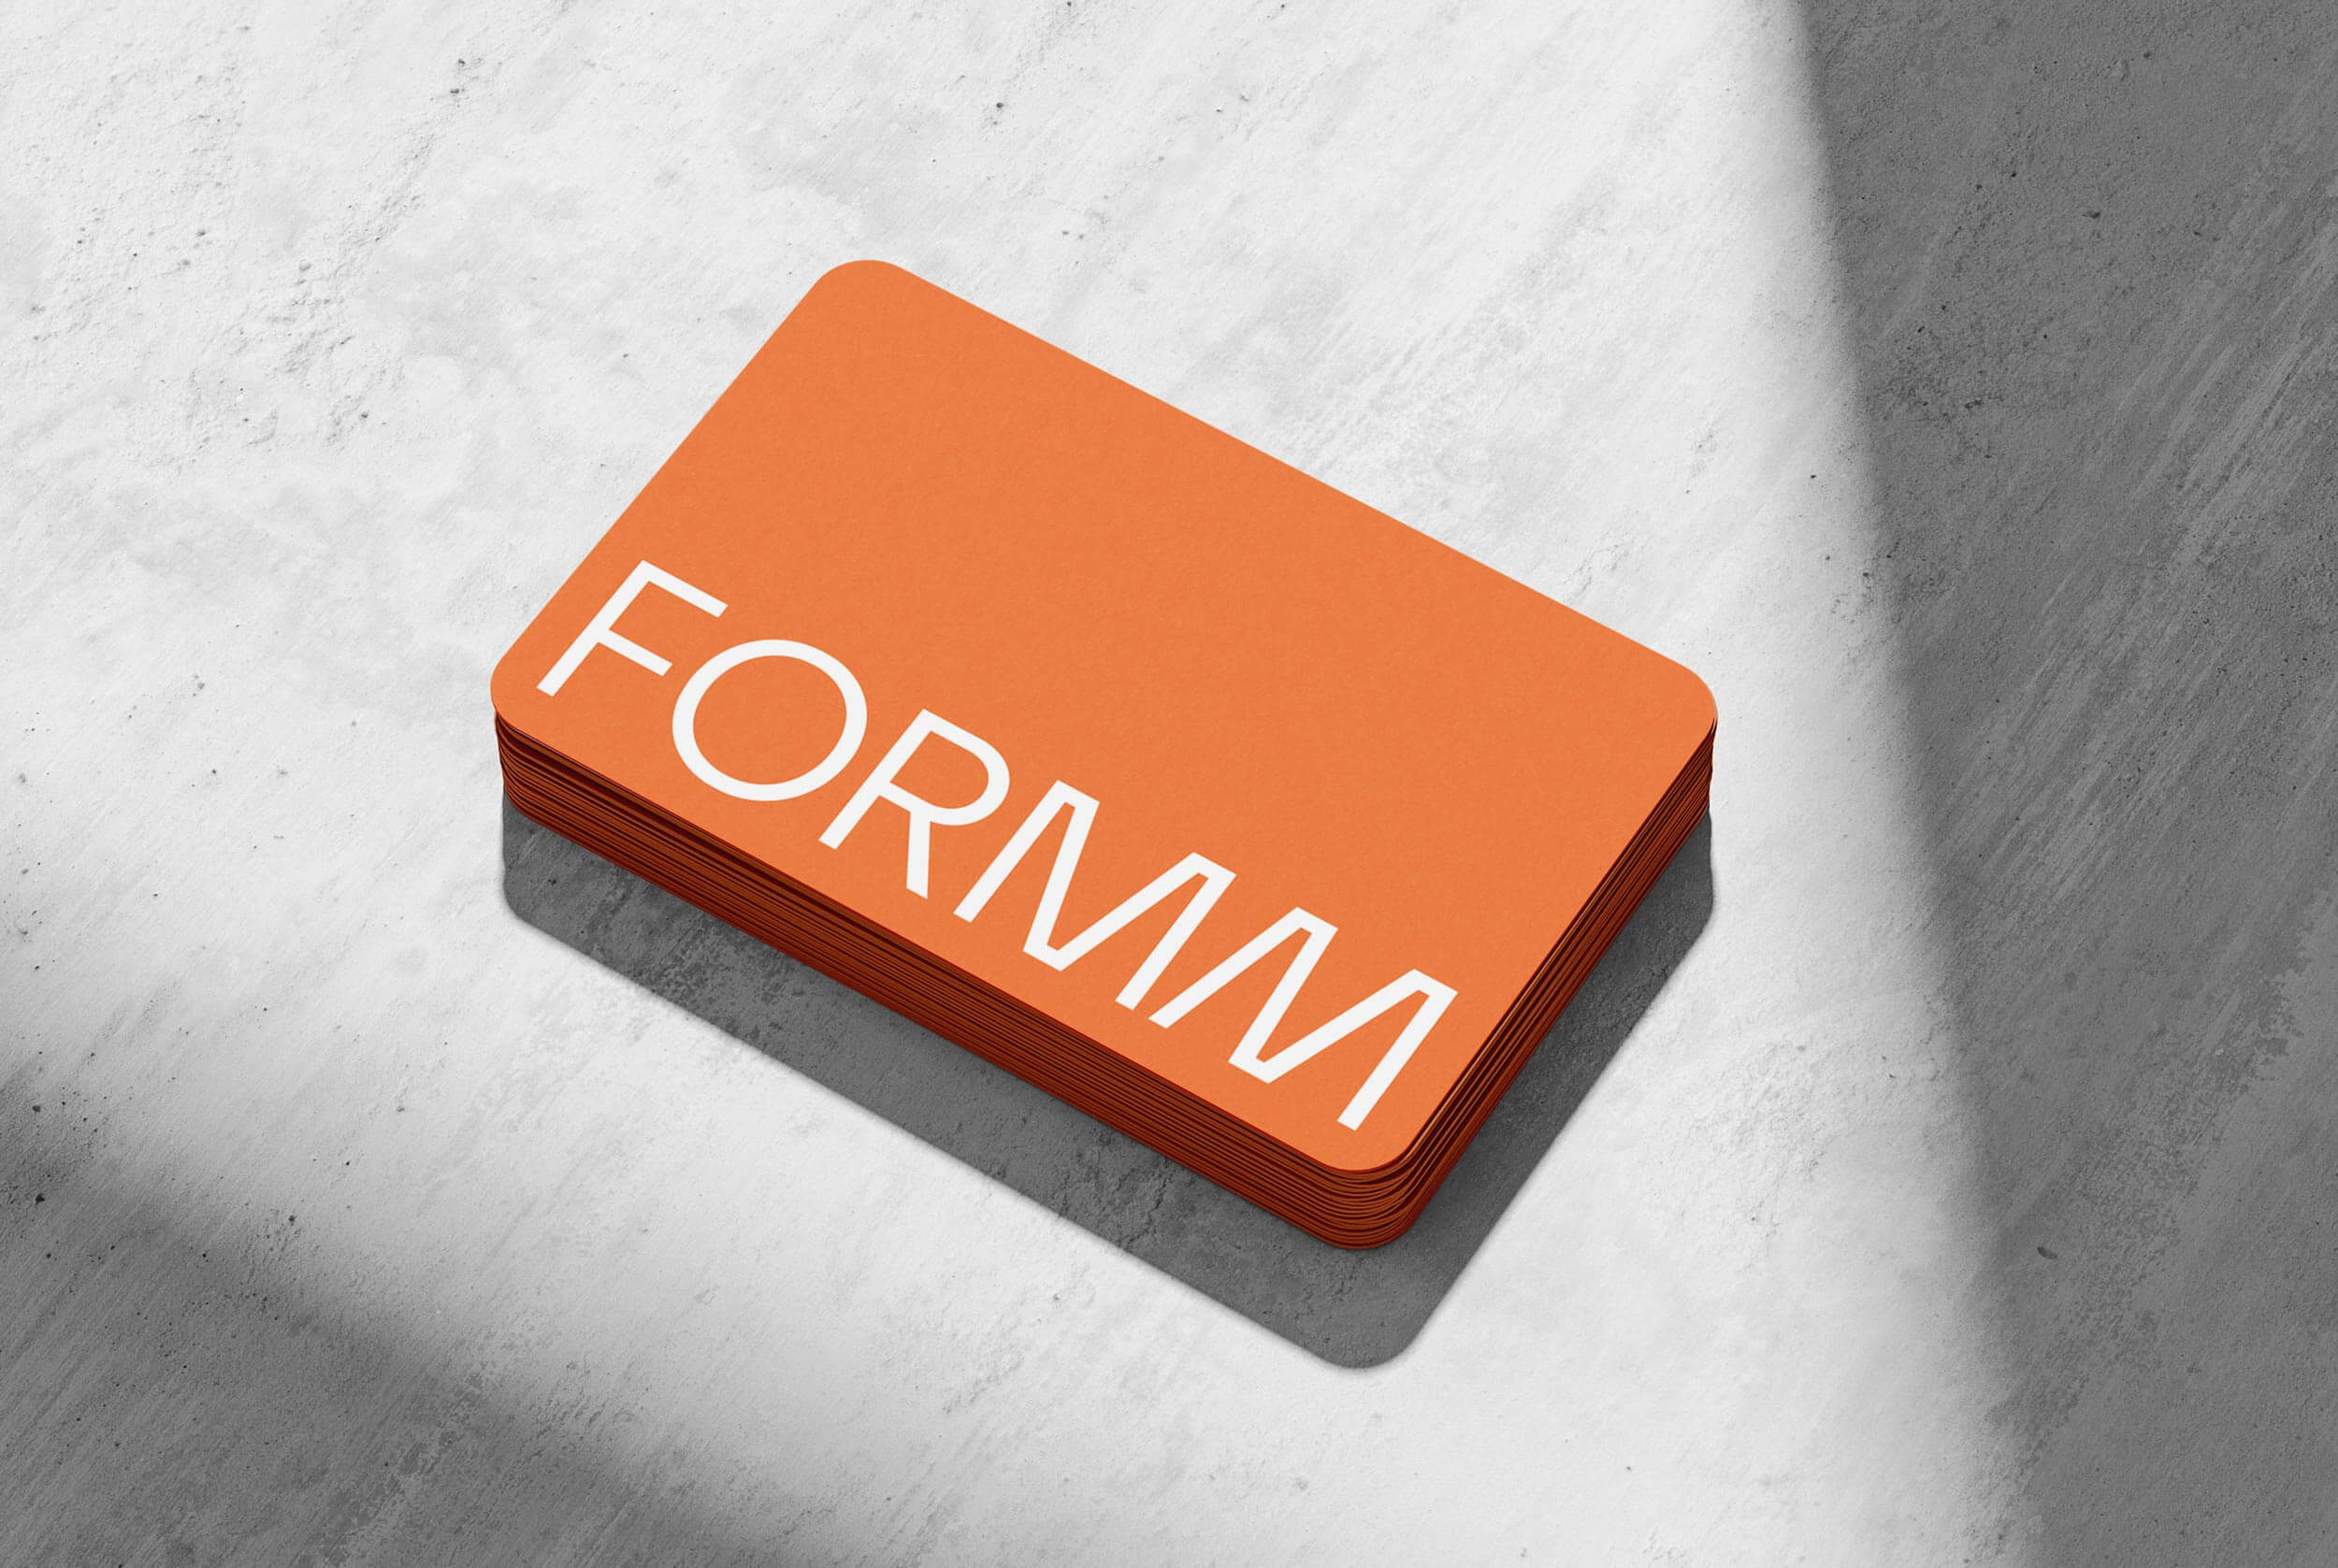 Formm Brand Identity Designed by Michele Verze